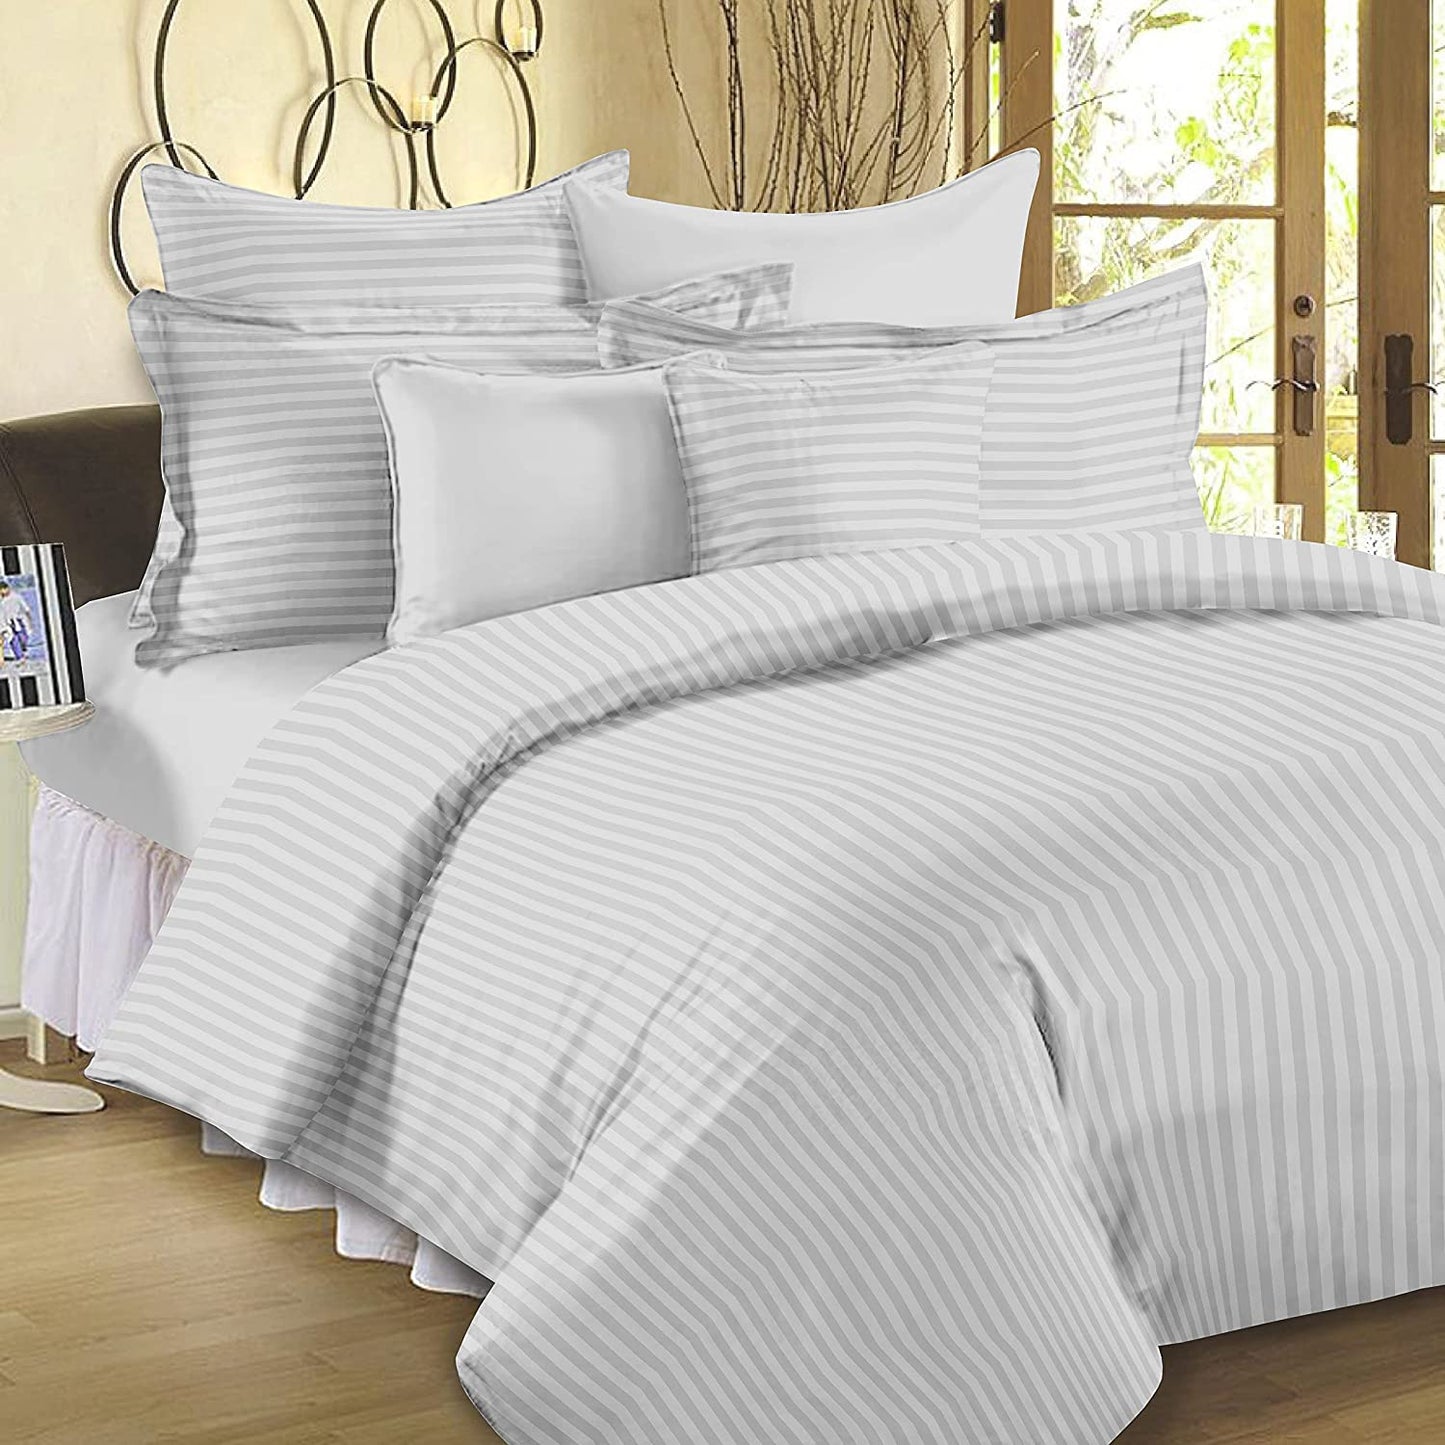 Coppton striped bedsheet